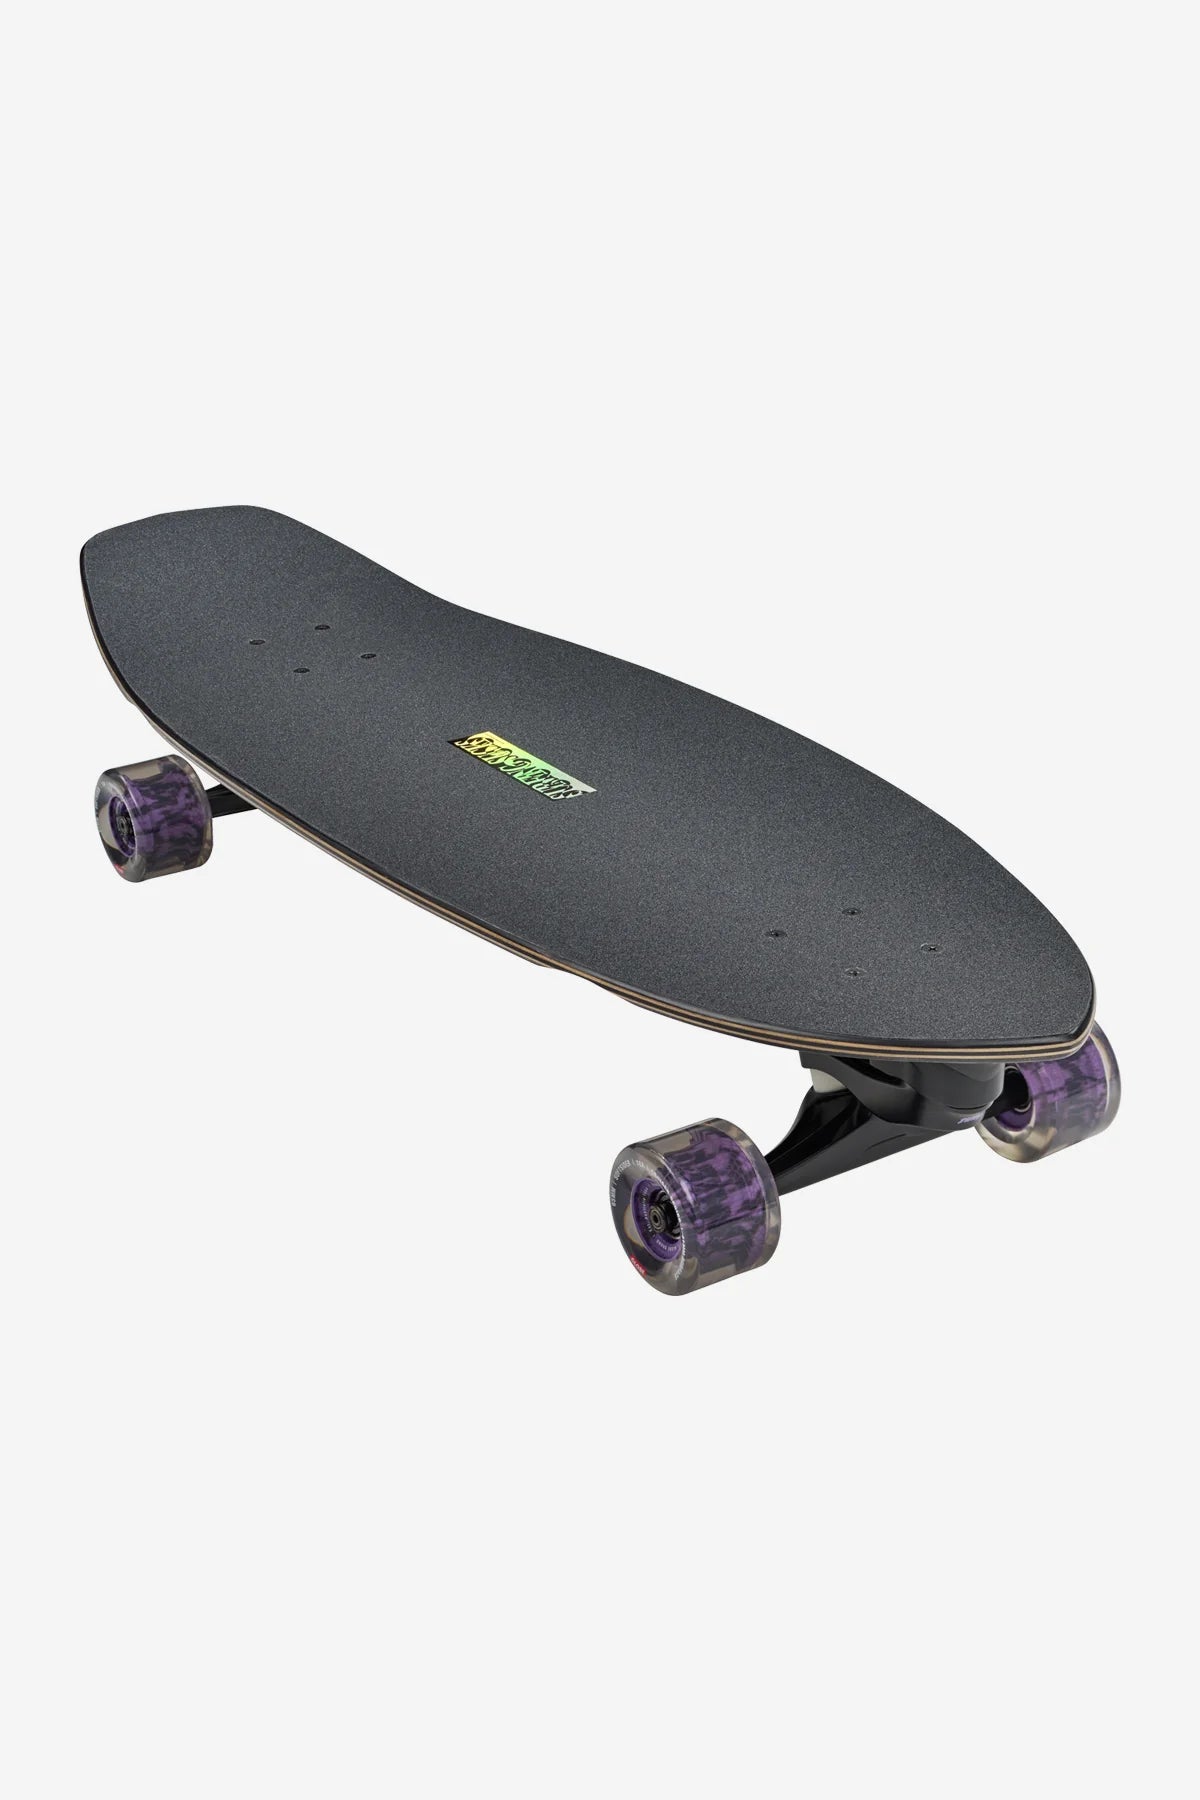 Globe - Dope Machine 32" Surf skateboard - Misfit/Rain Oil